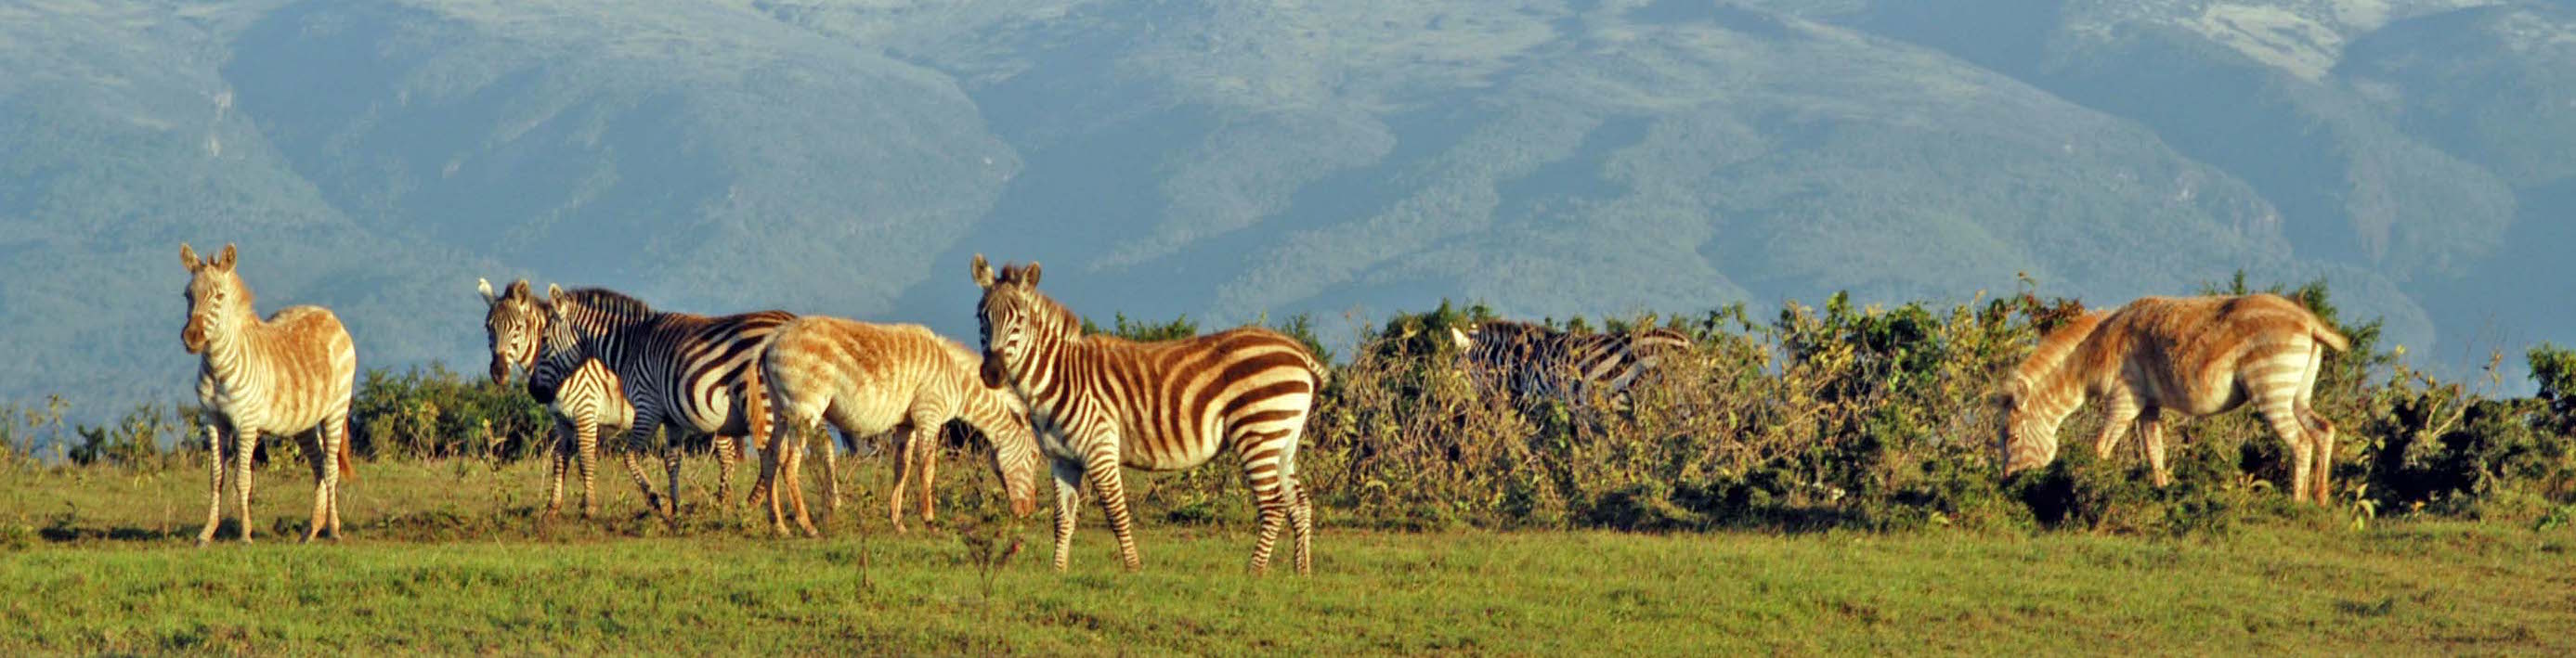 Kenya Collars Zebras Banner